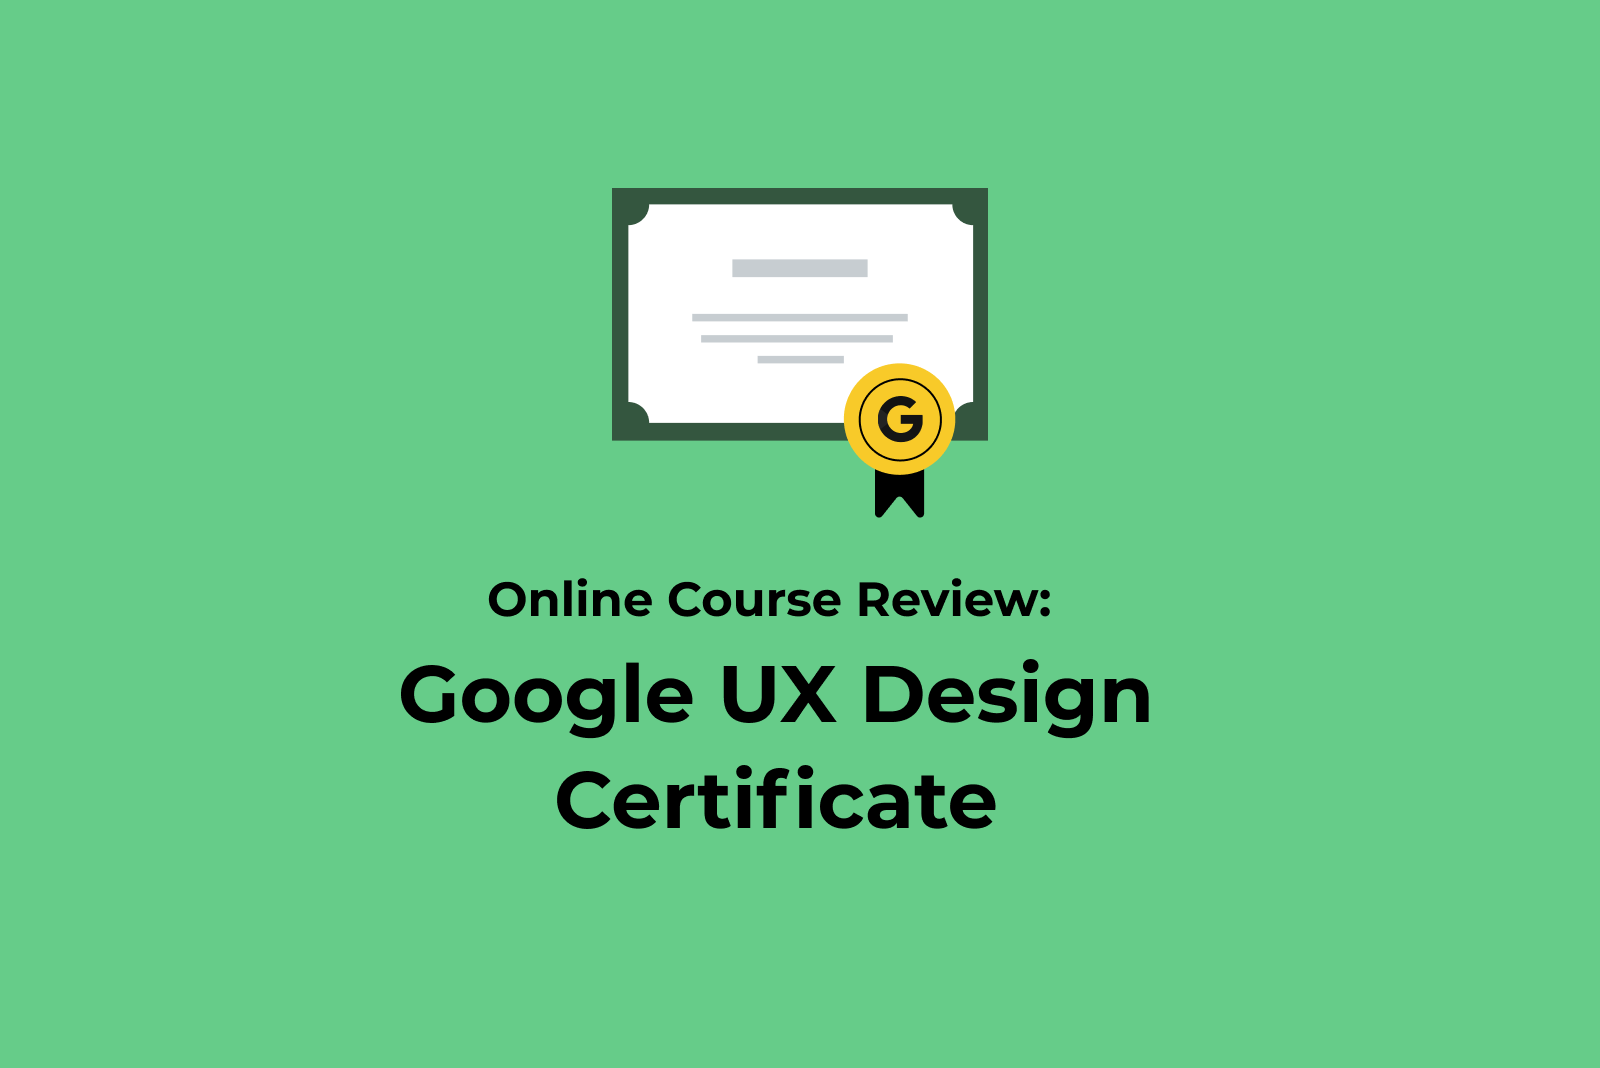 Online Course Review: Google UX Design Certificate